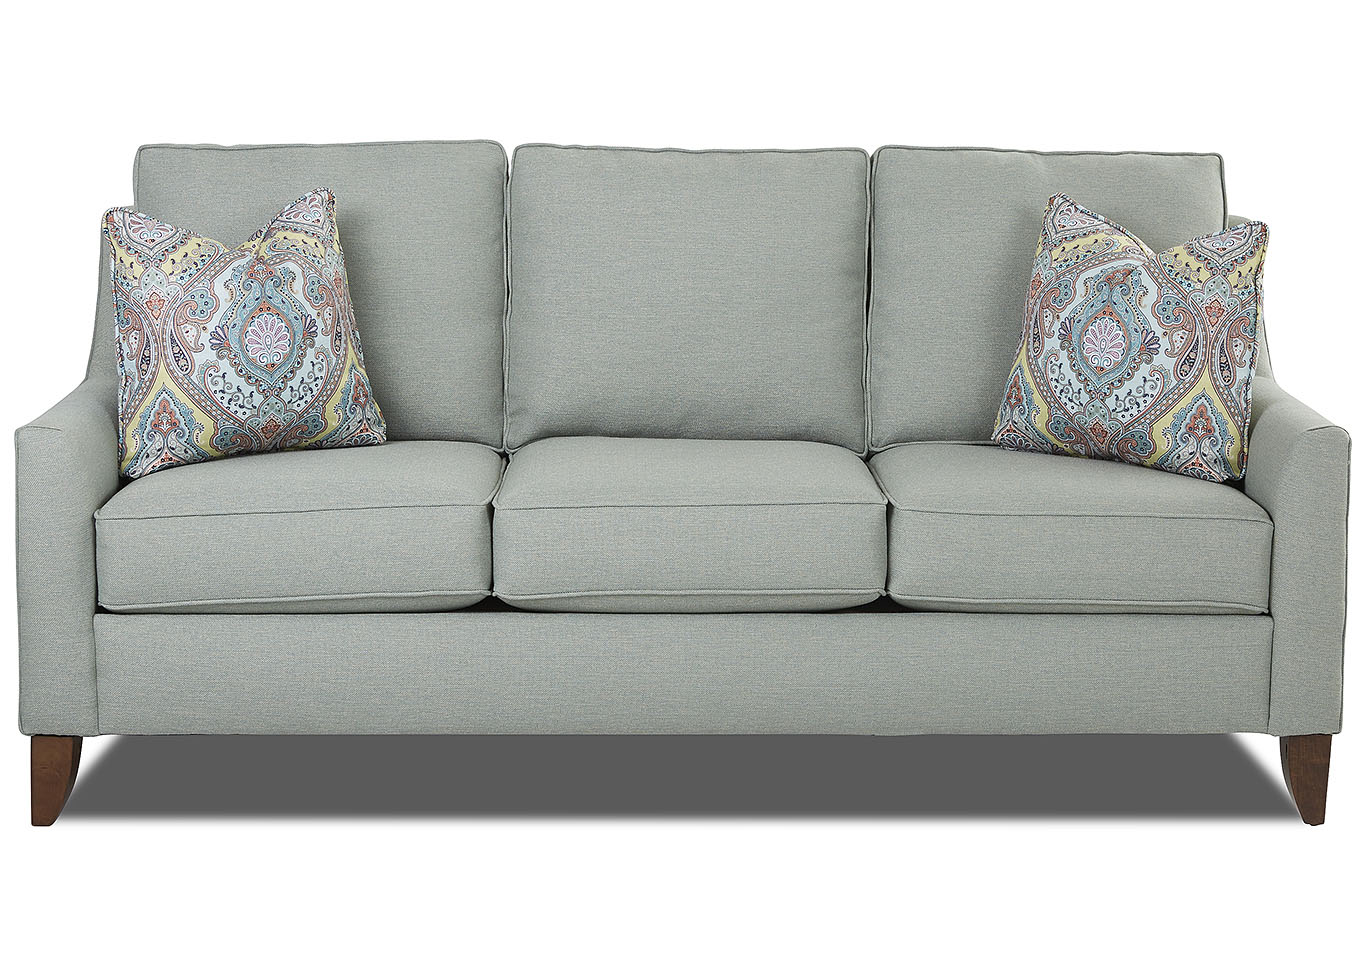 Belton Green Stationary Fabric Sofa,Klaussner Home Furnishings